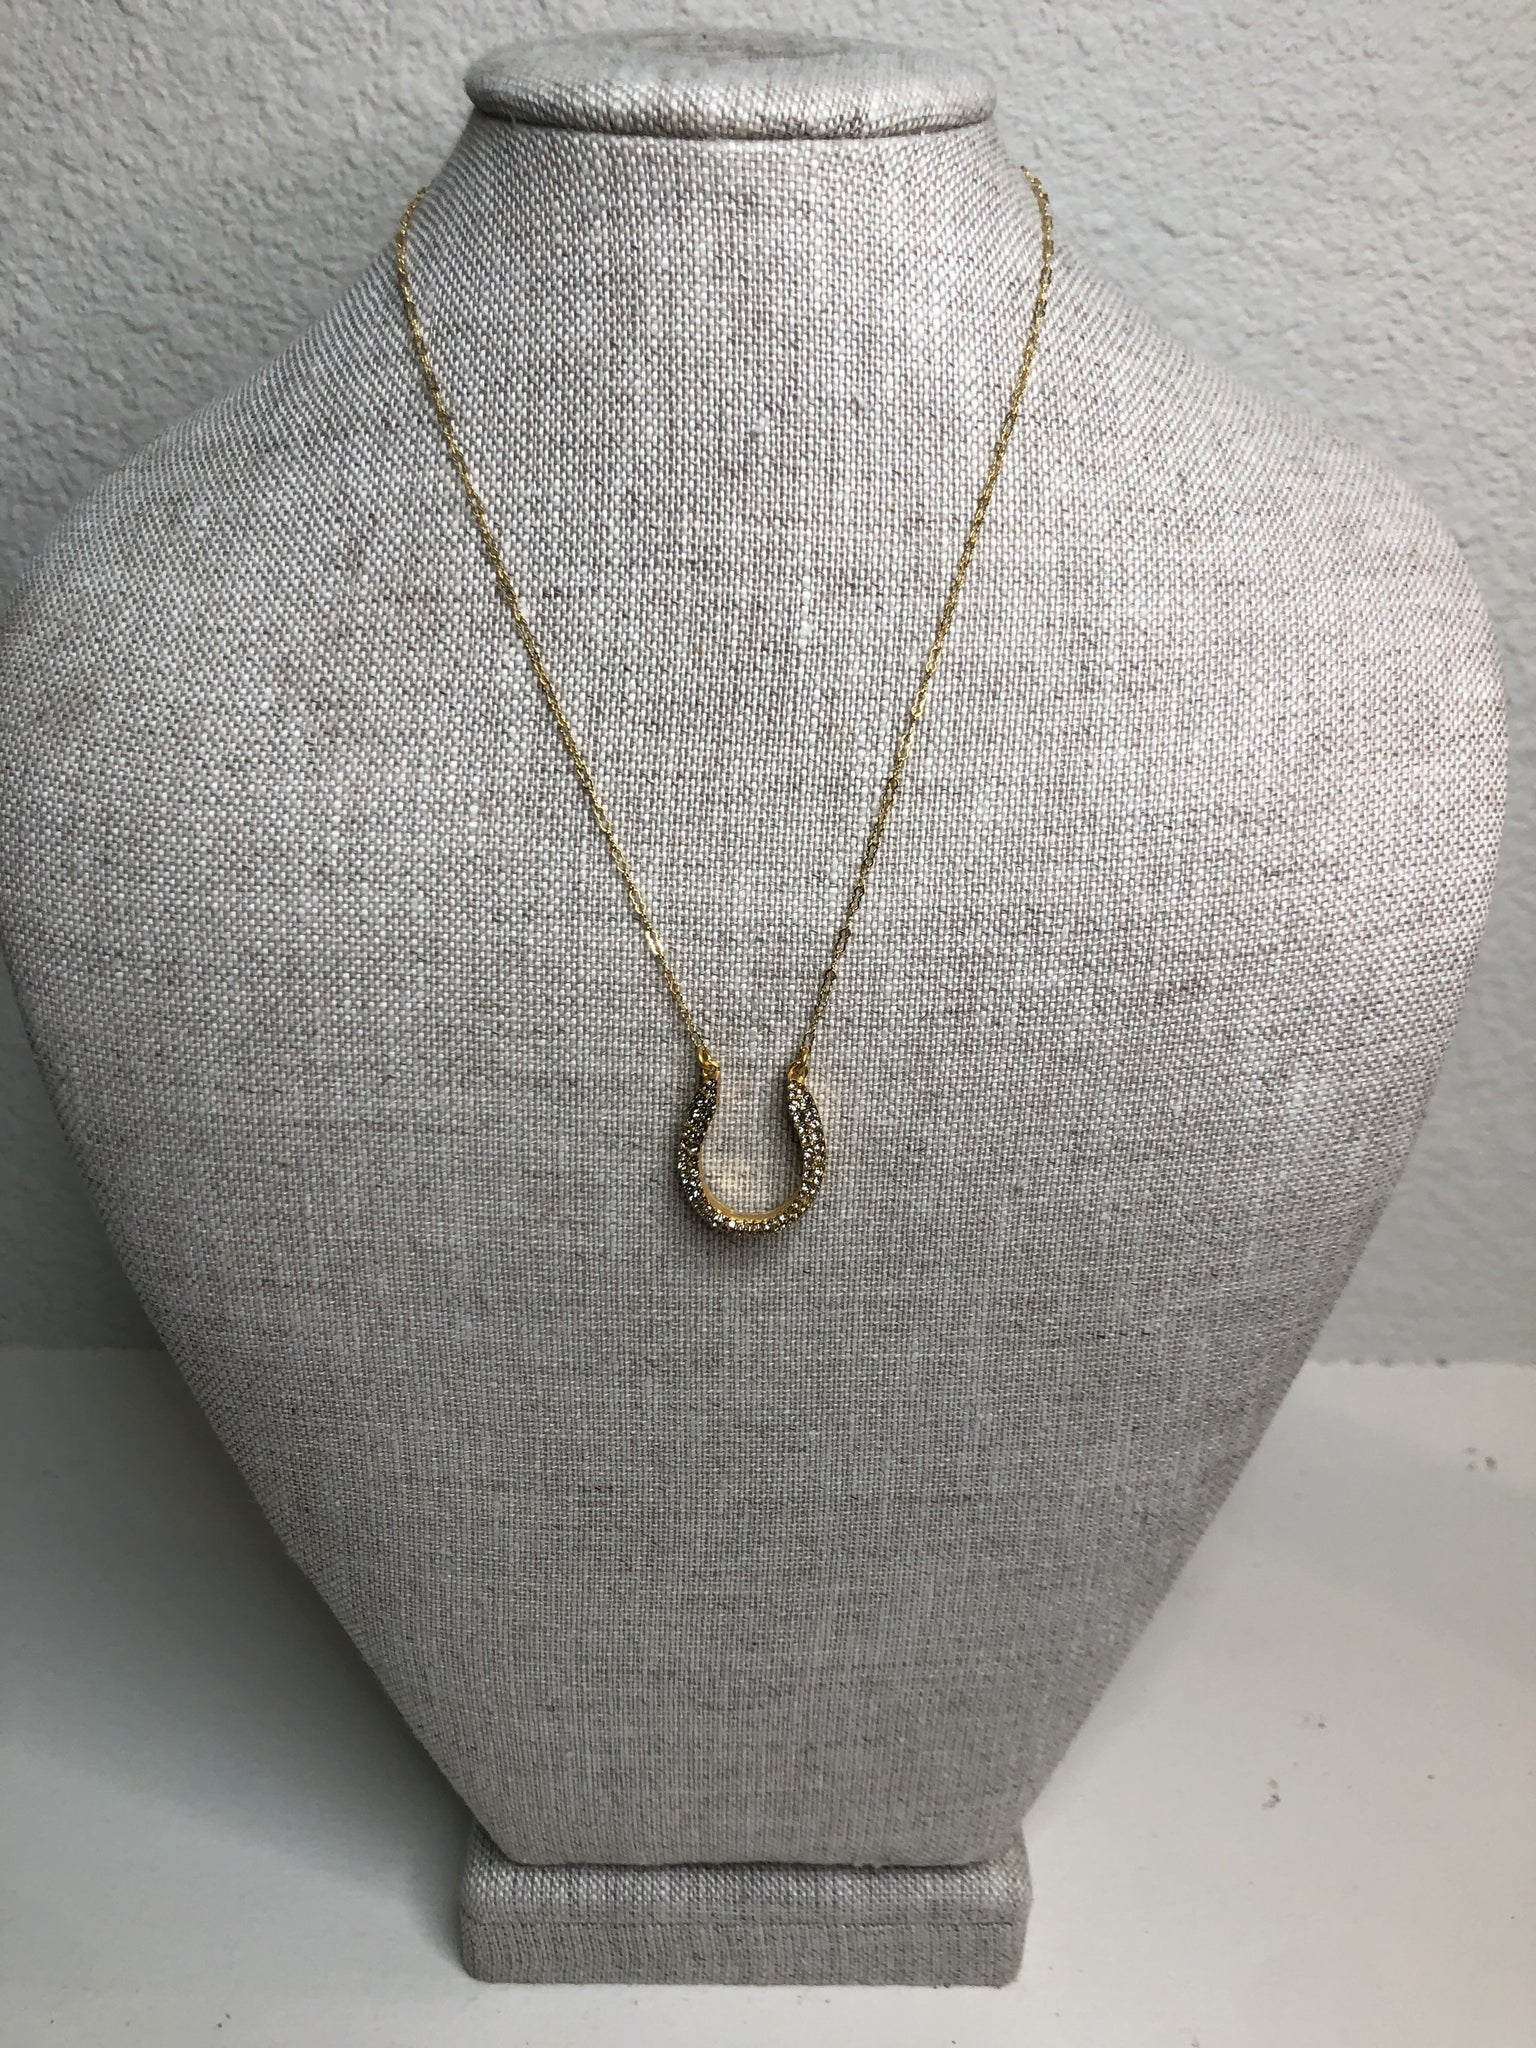 Rebel Designs Gold Horseshoe Necklace